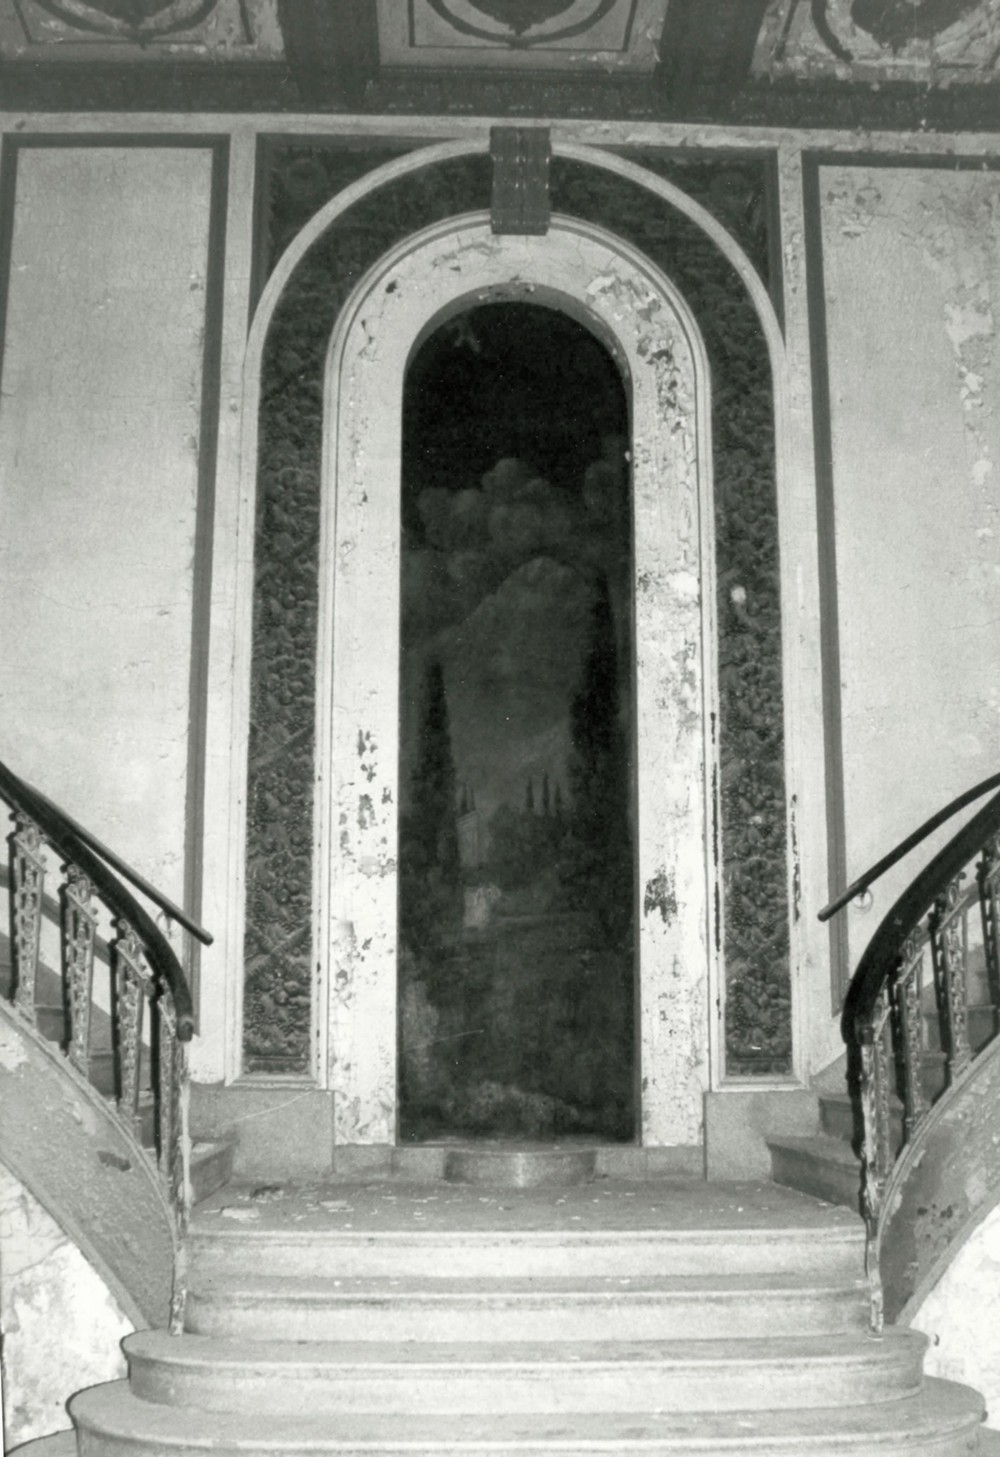 Hotel Waukegan - Chateau Waukegan, Waukegan Illinois Stairway in lobby leading to mezzanine (1994)